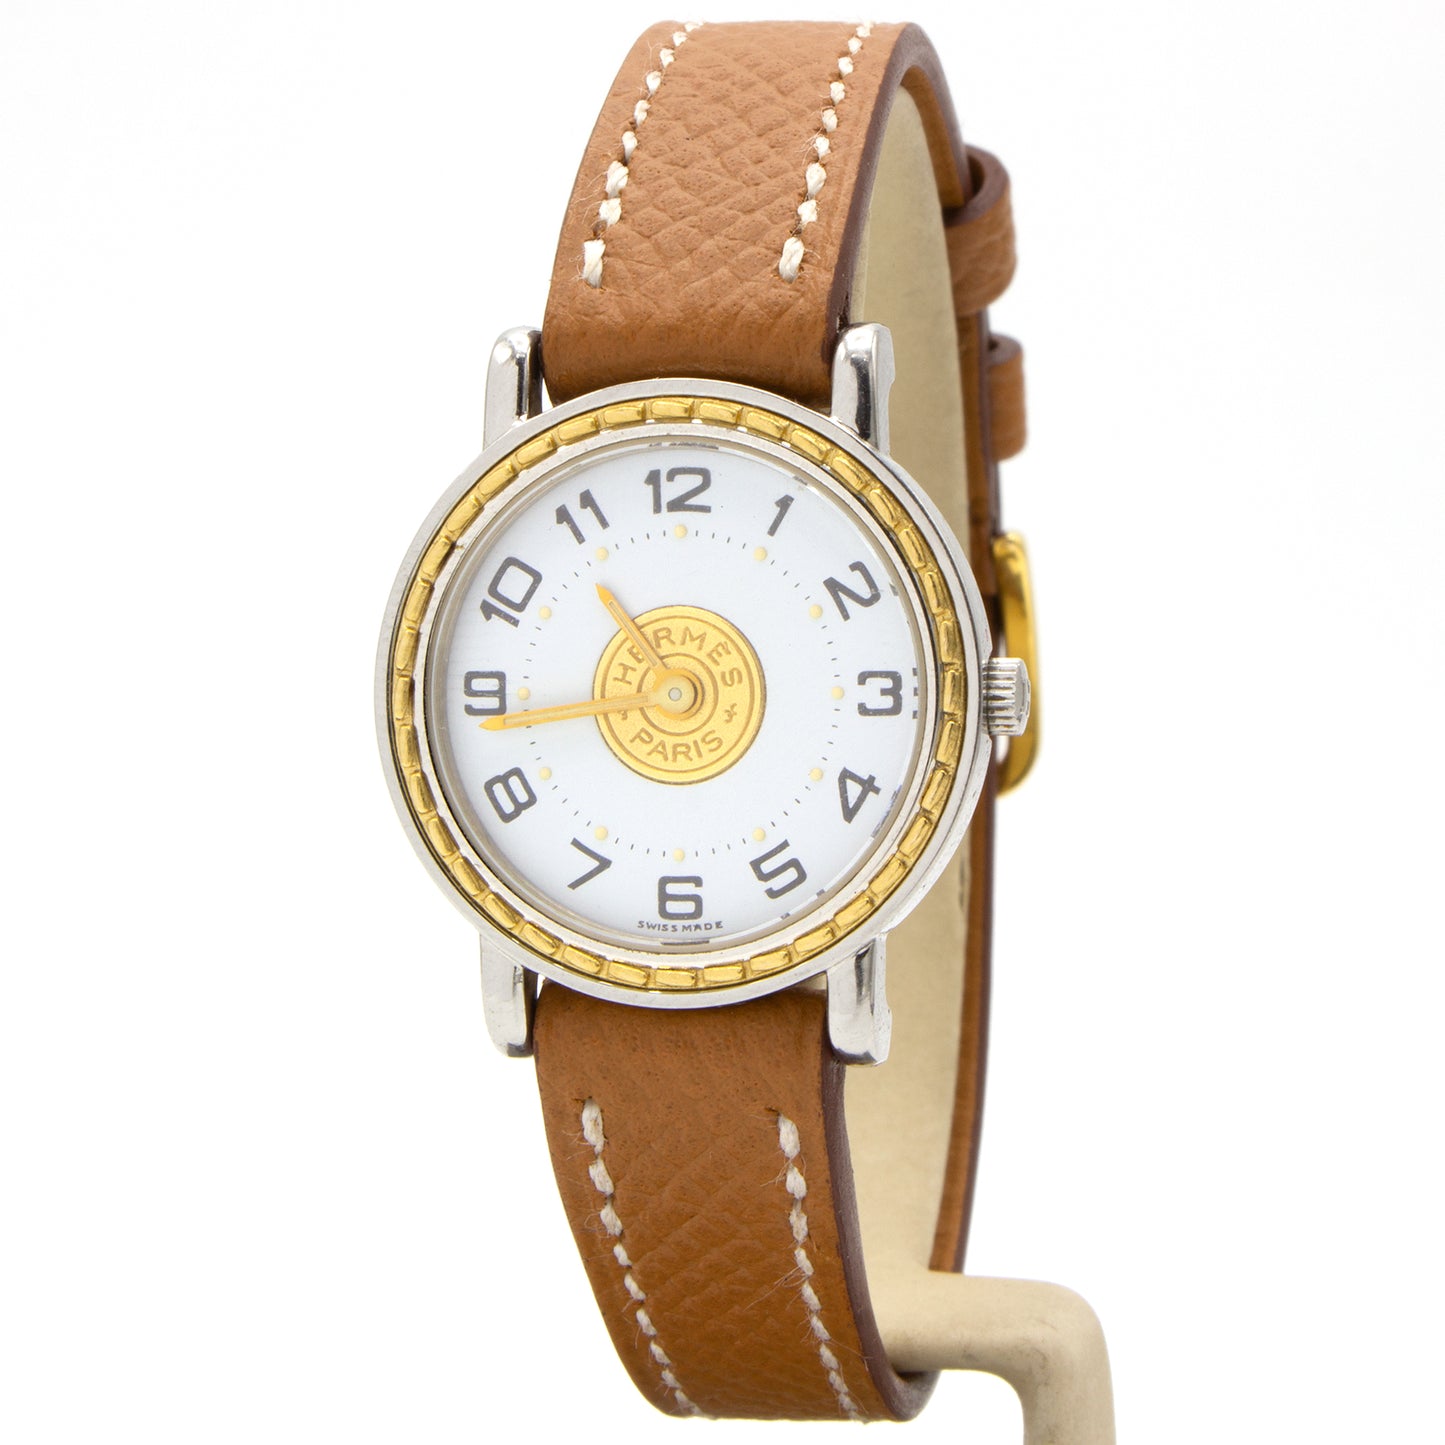 Hermes Sellier 24mm watch